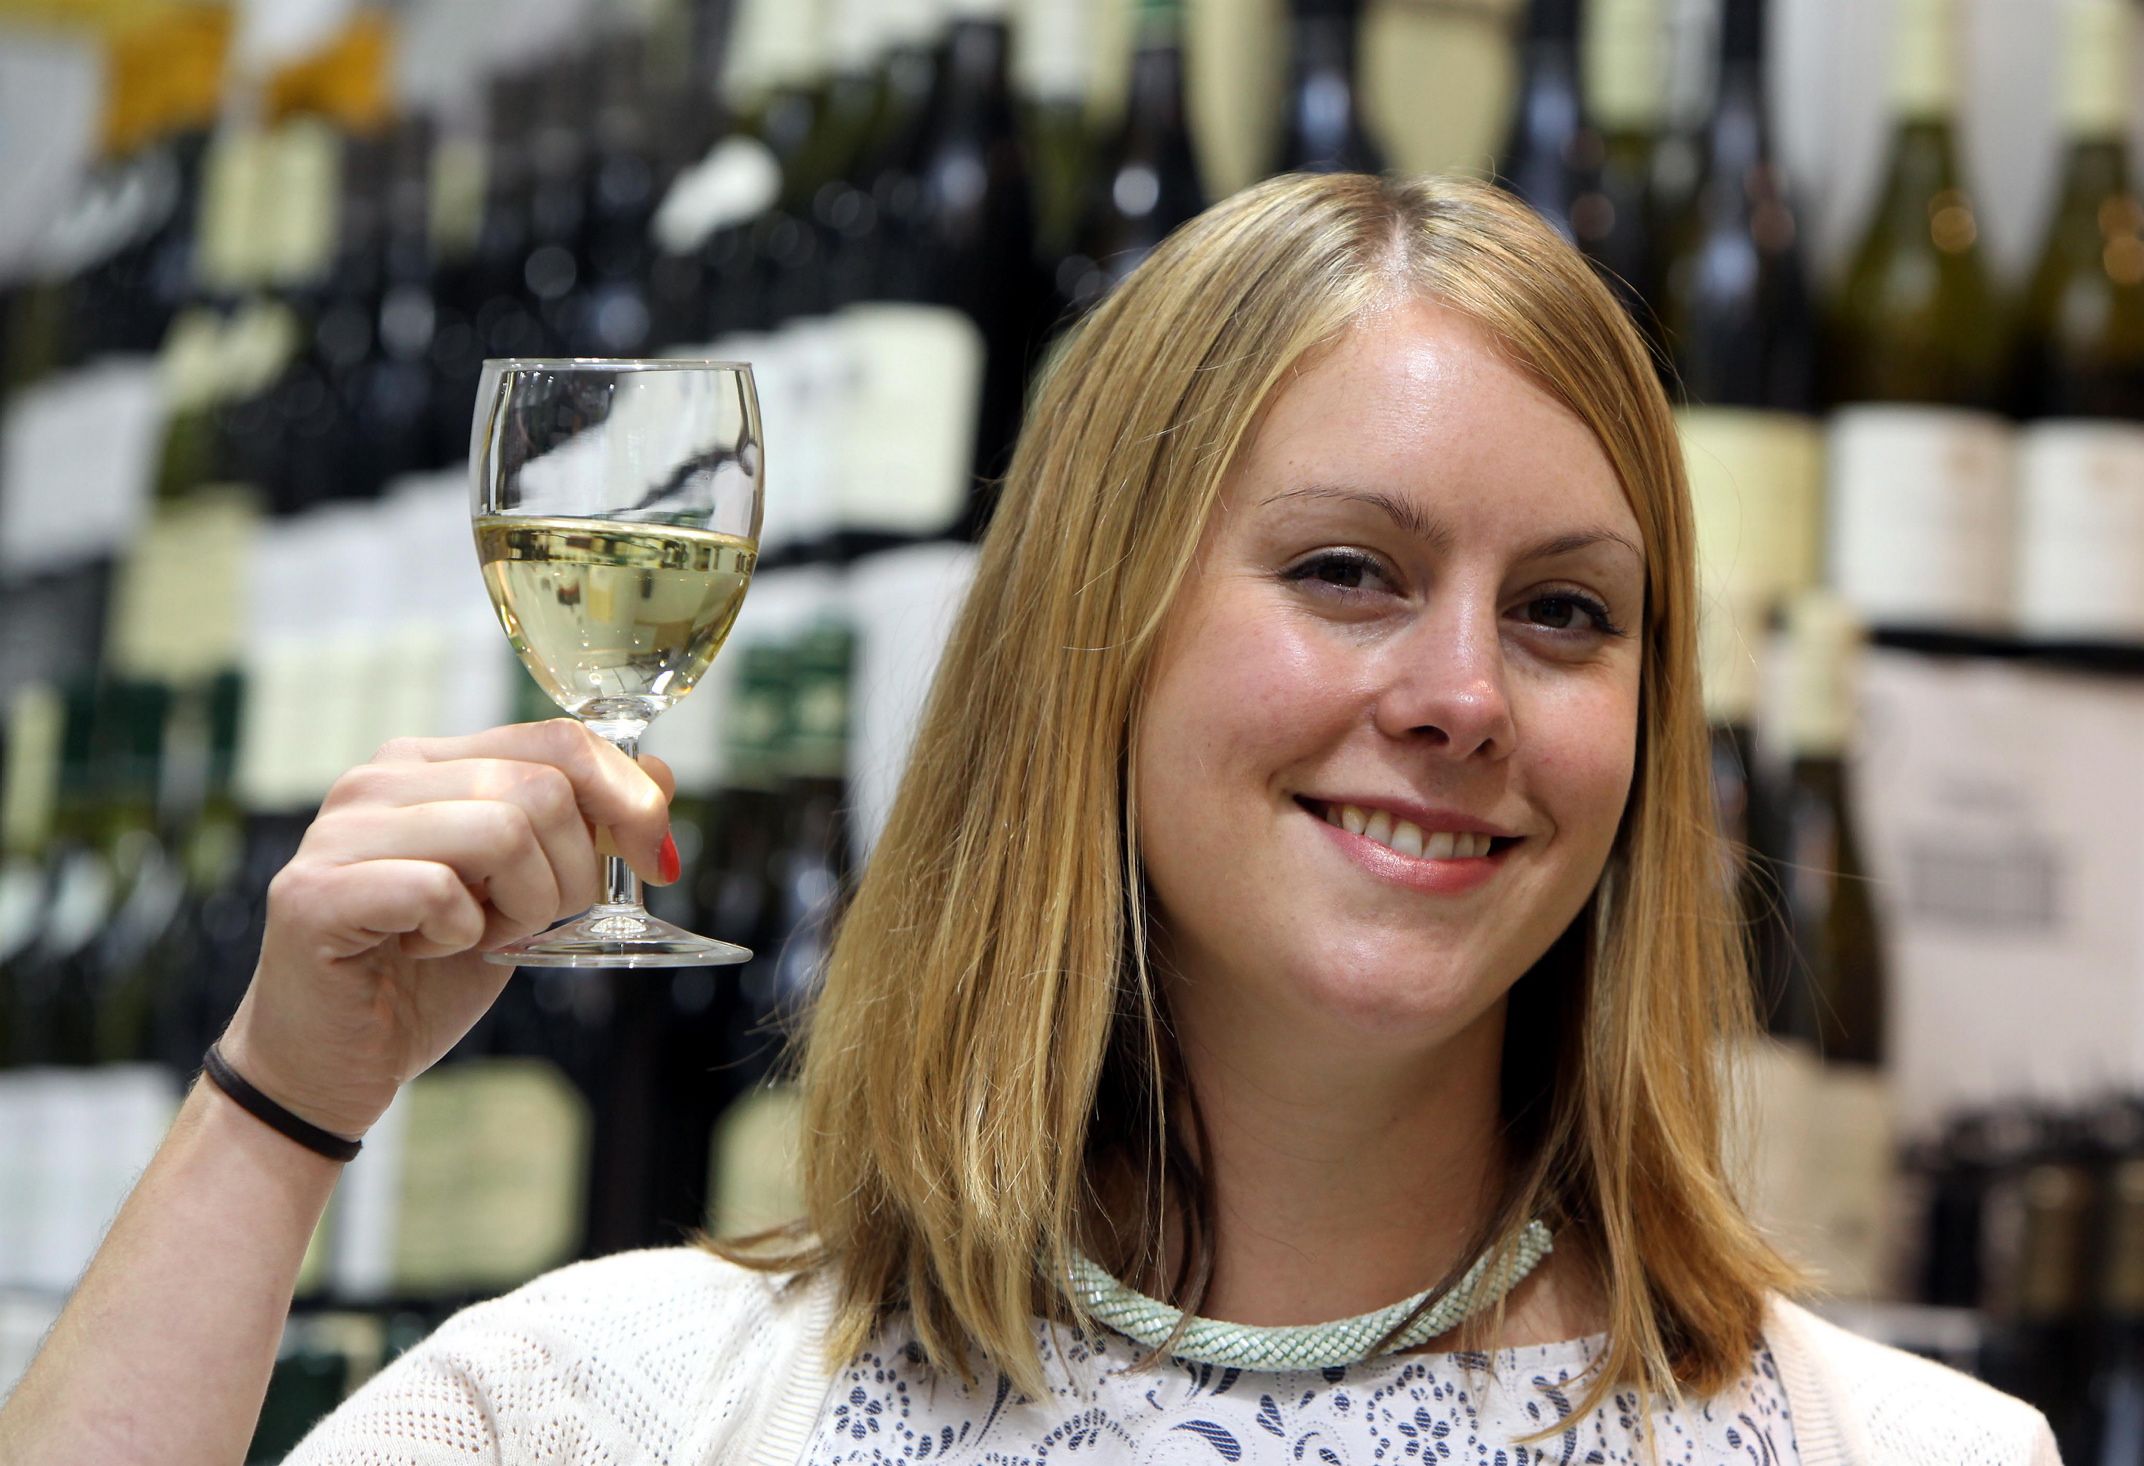 Wine Australia’s Tasting Blind Club champion on how to blind taste